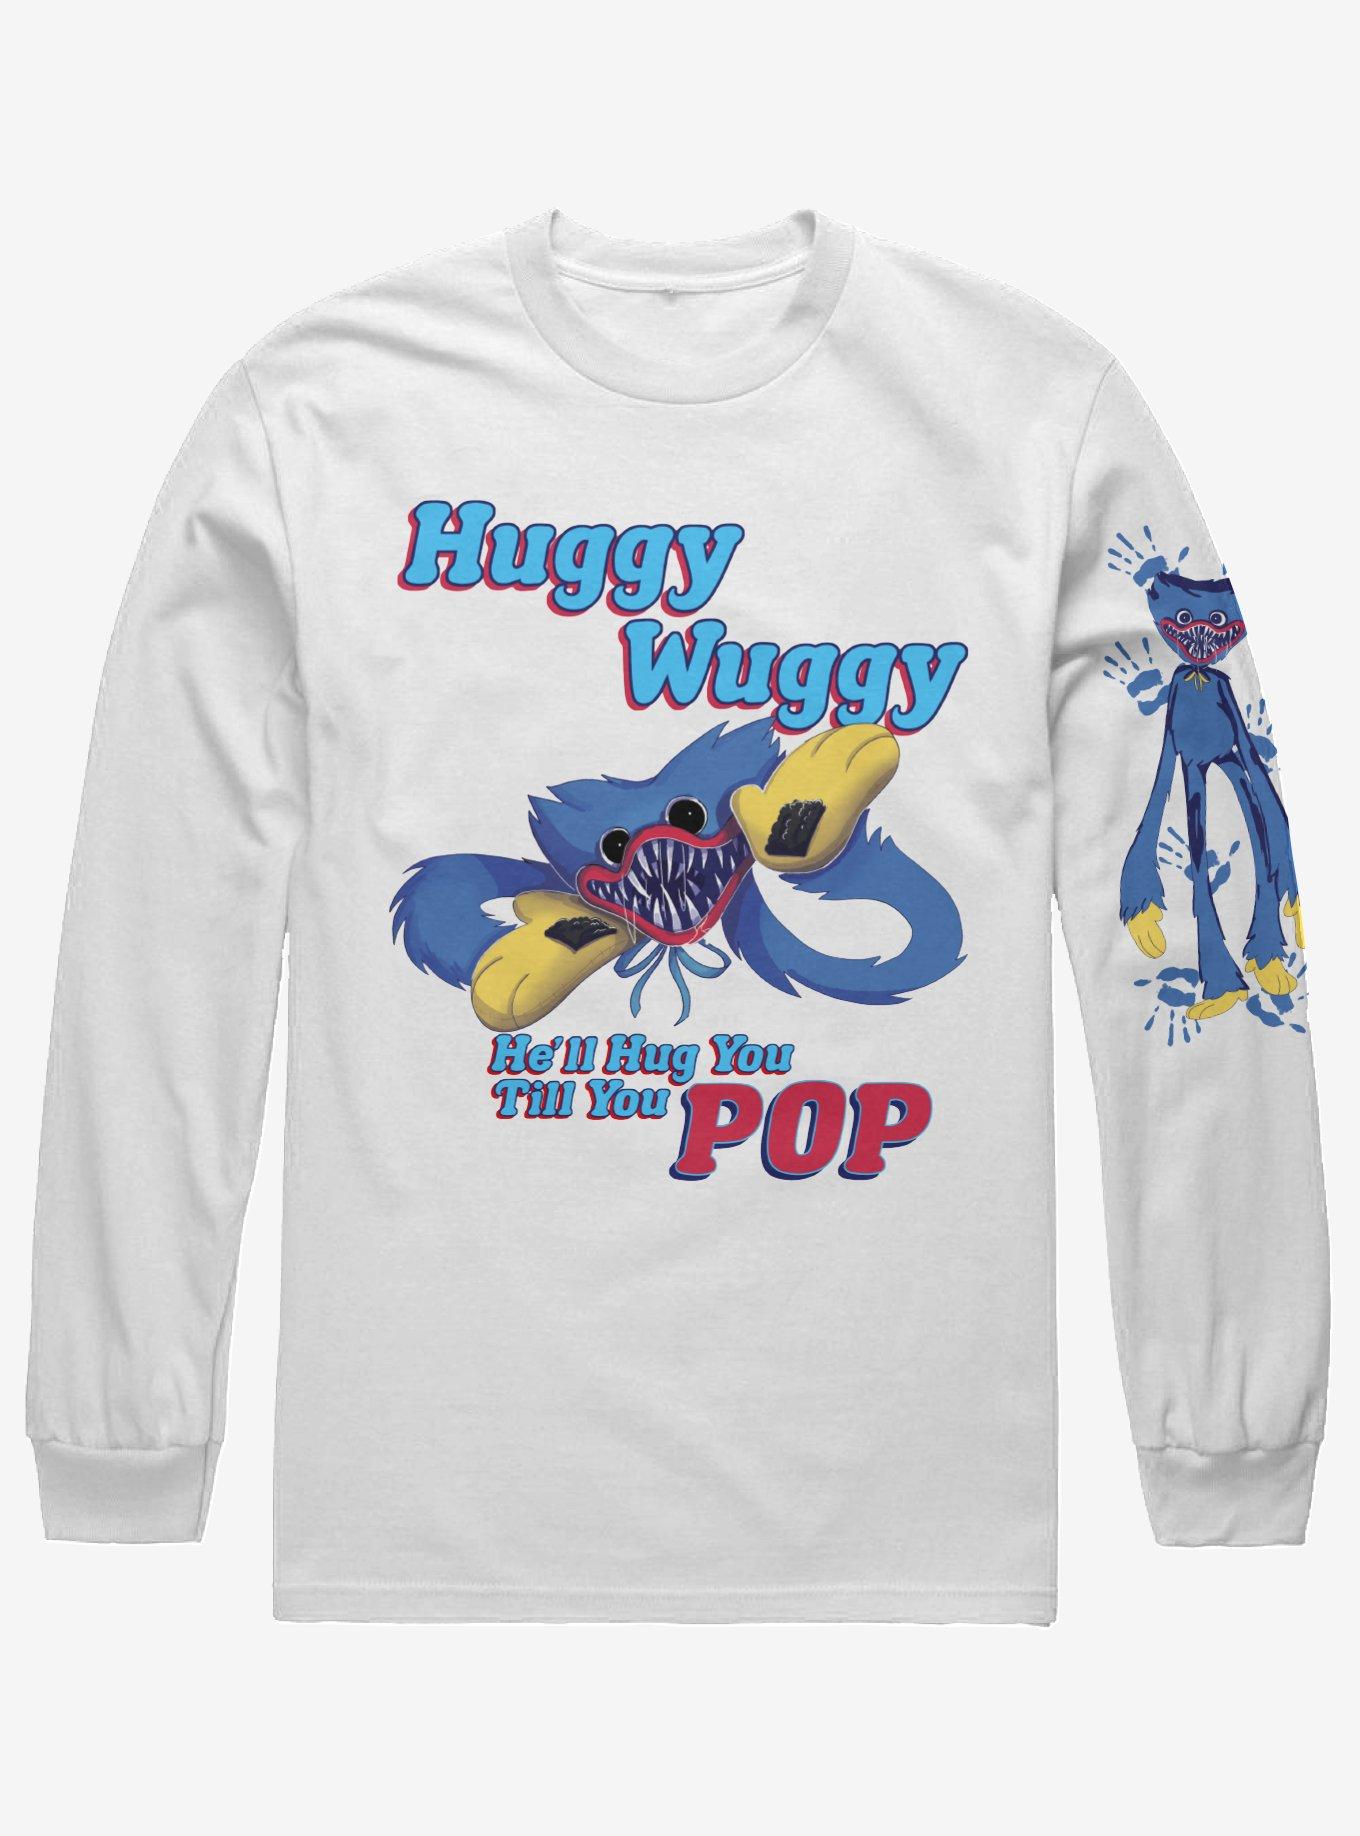 Huggy Wuggy From Poppy Playtime Chapter 2 Unisex Sweatshirt - Teeruto